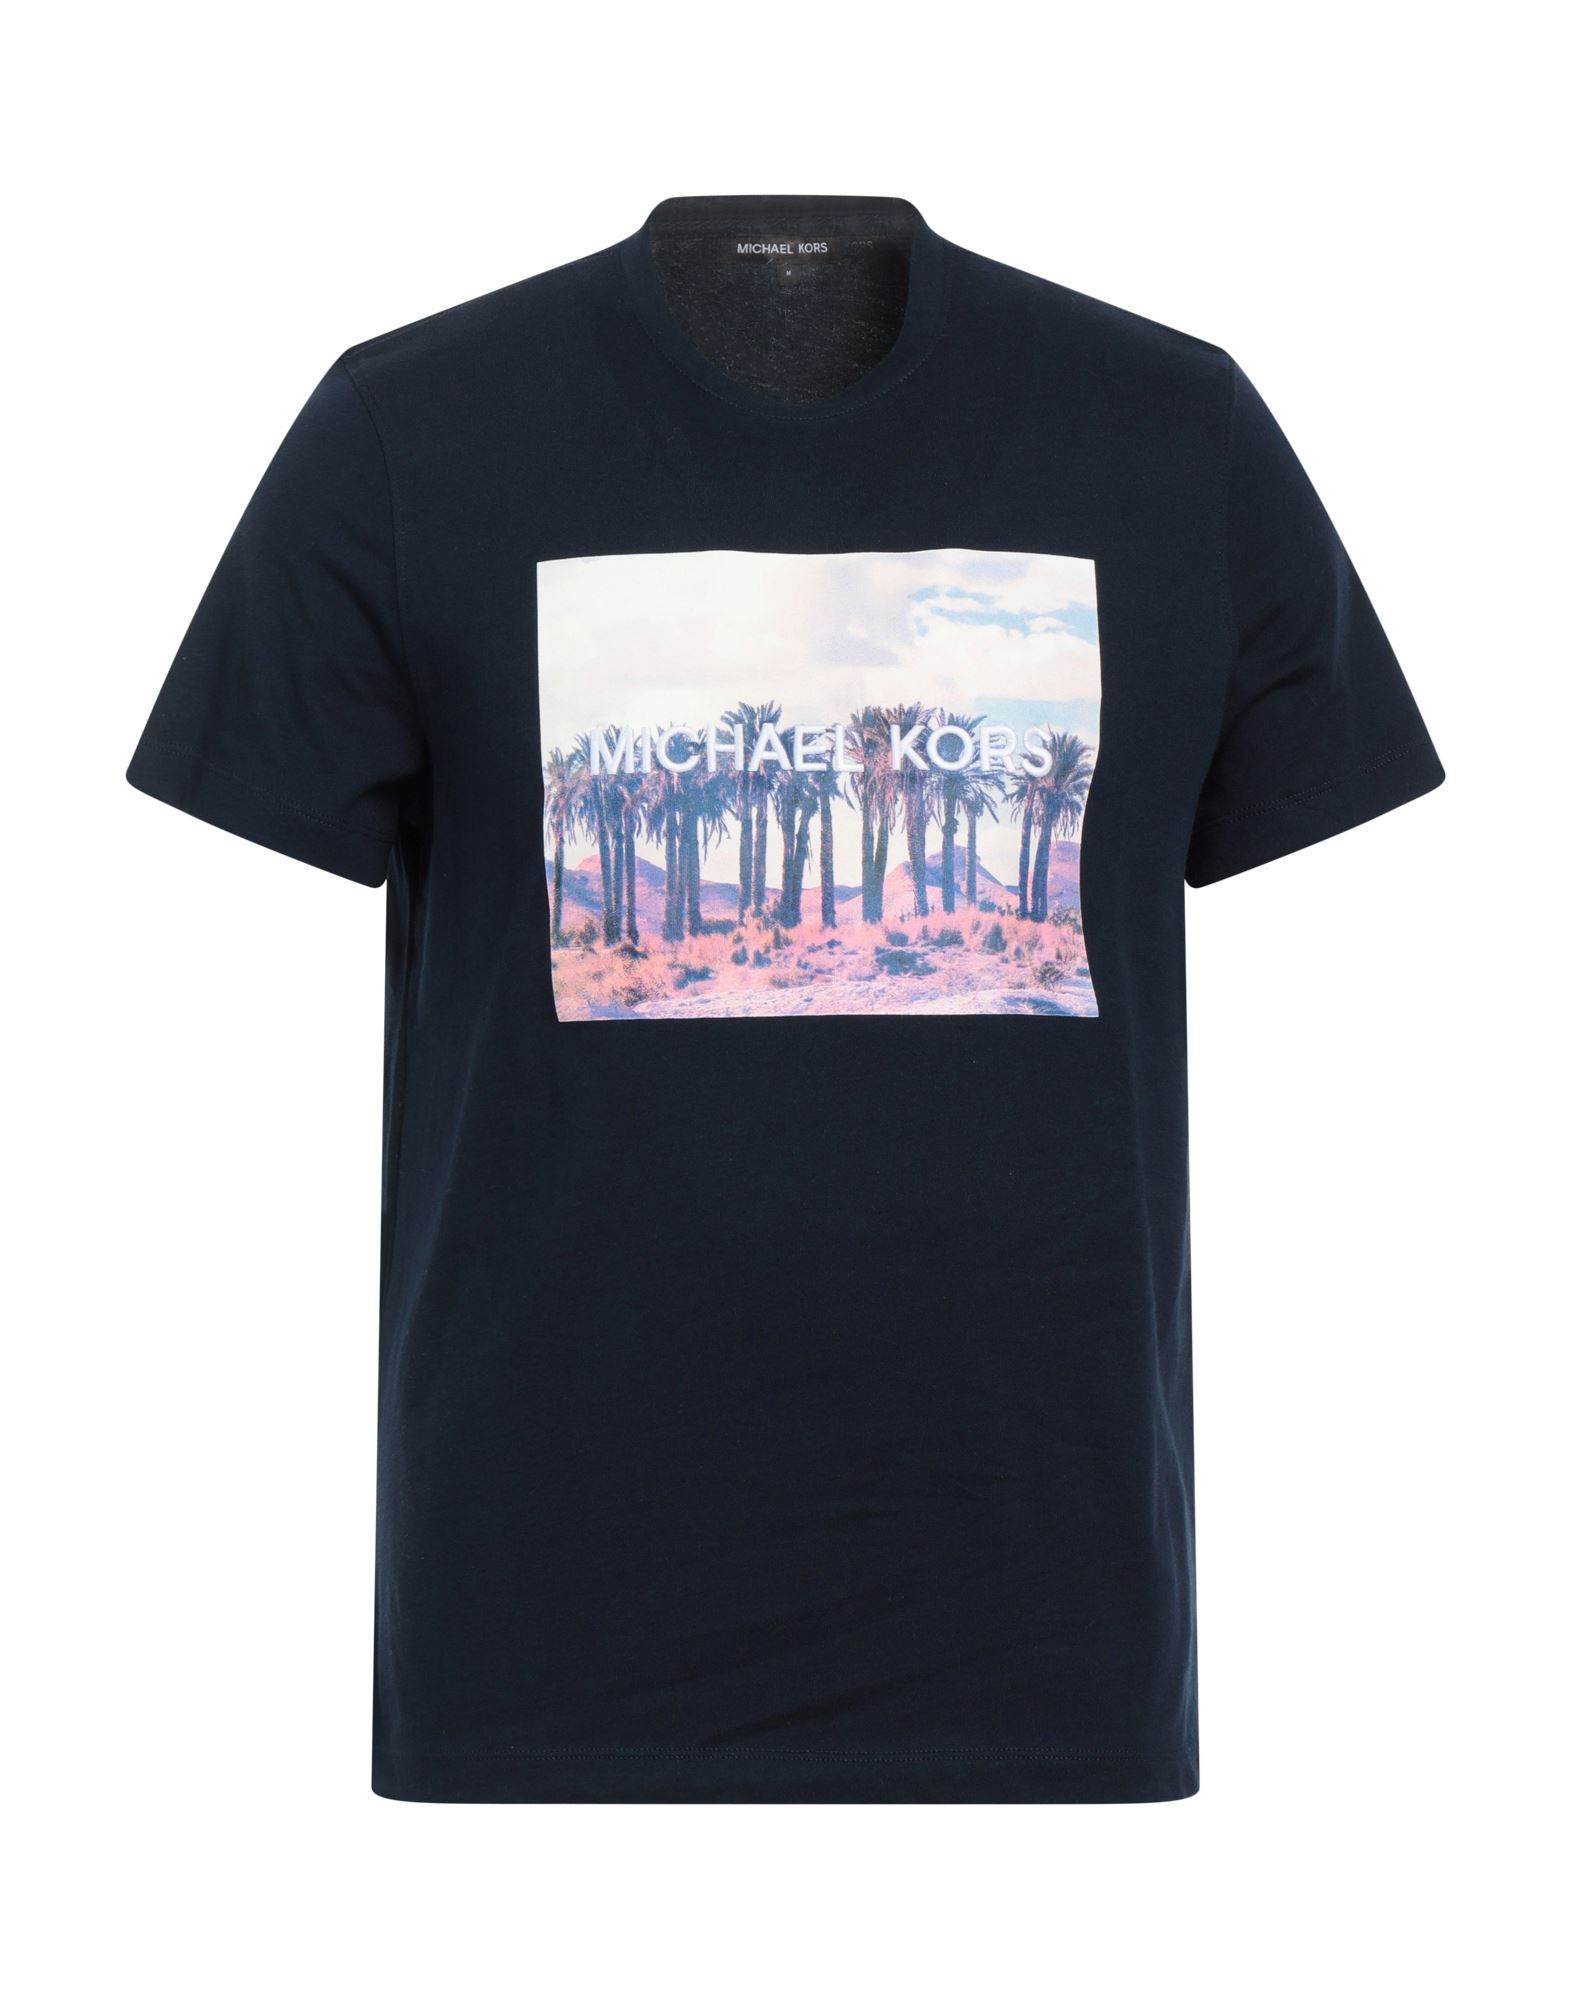 MICHAEL KORS MENS T-shirts Herren Nachtblau von MICHAEL KORS MENS